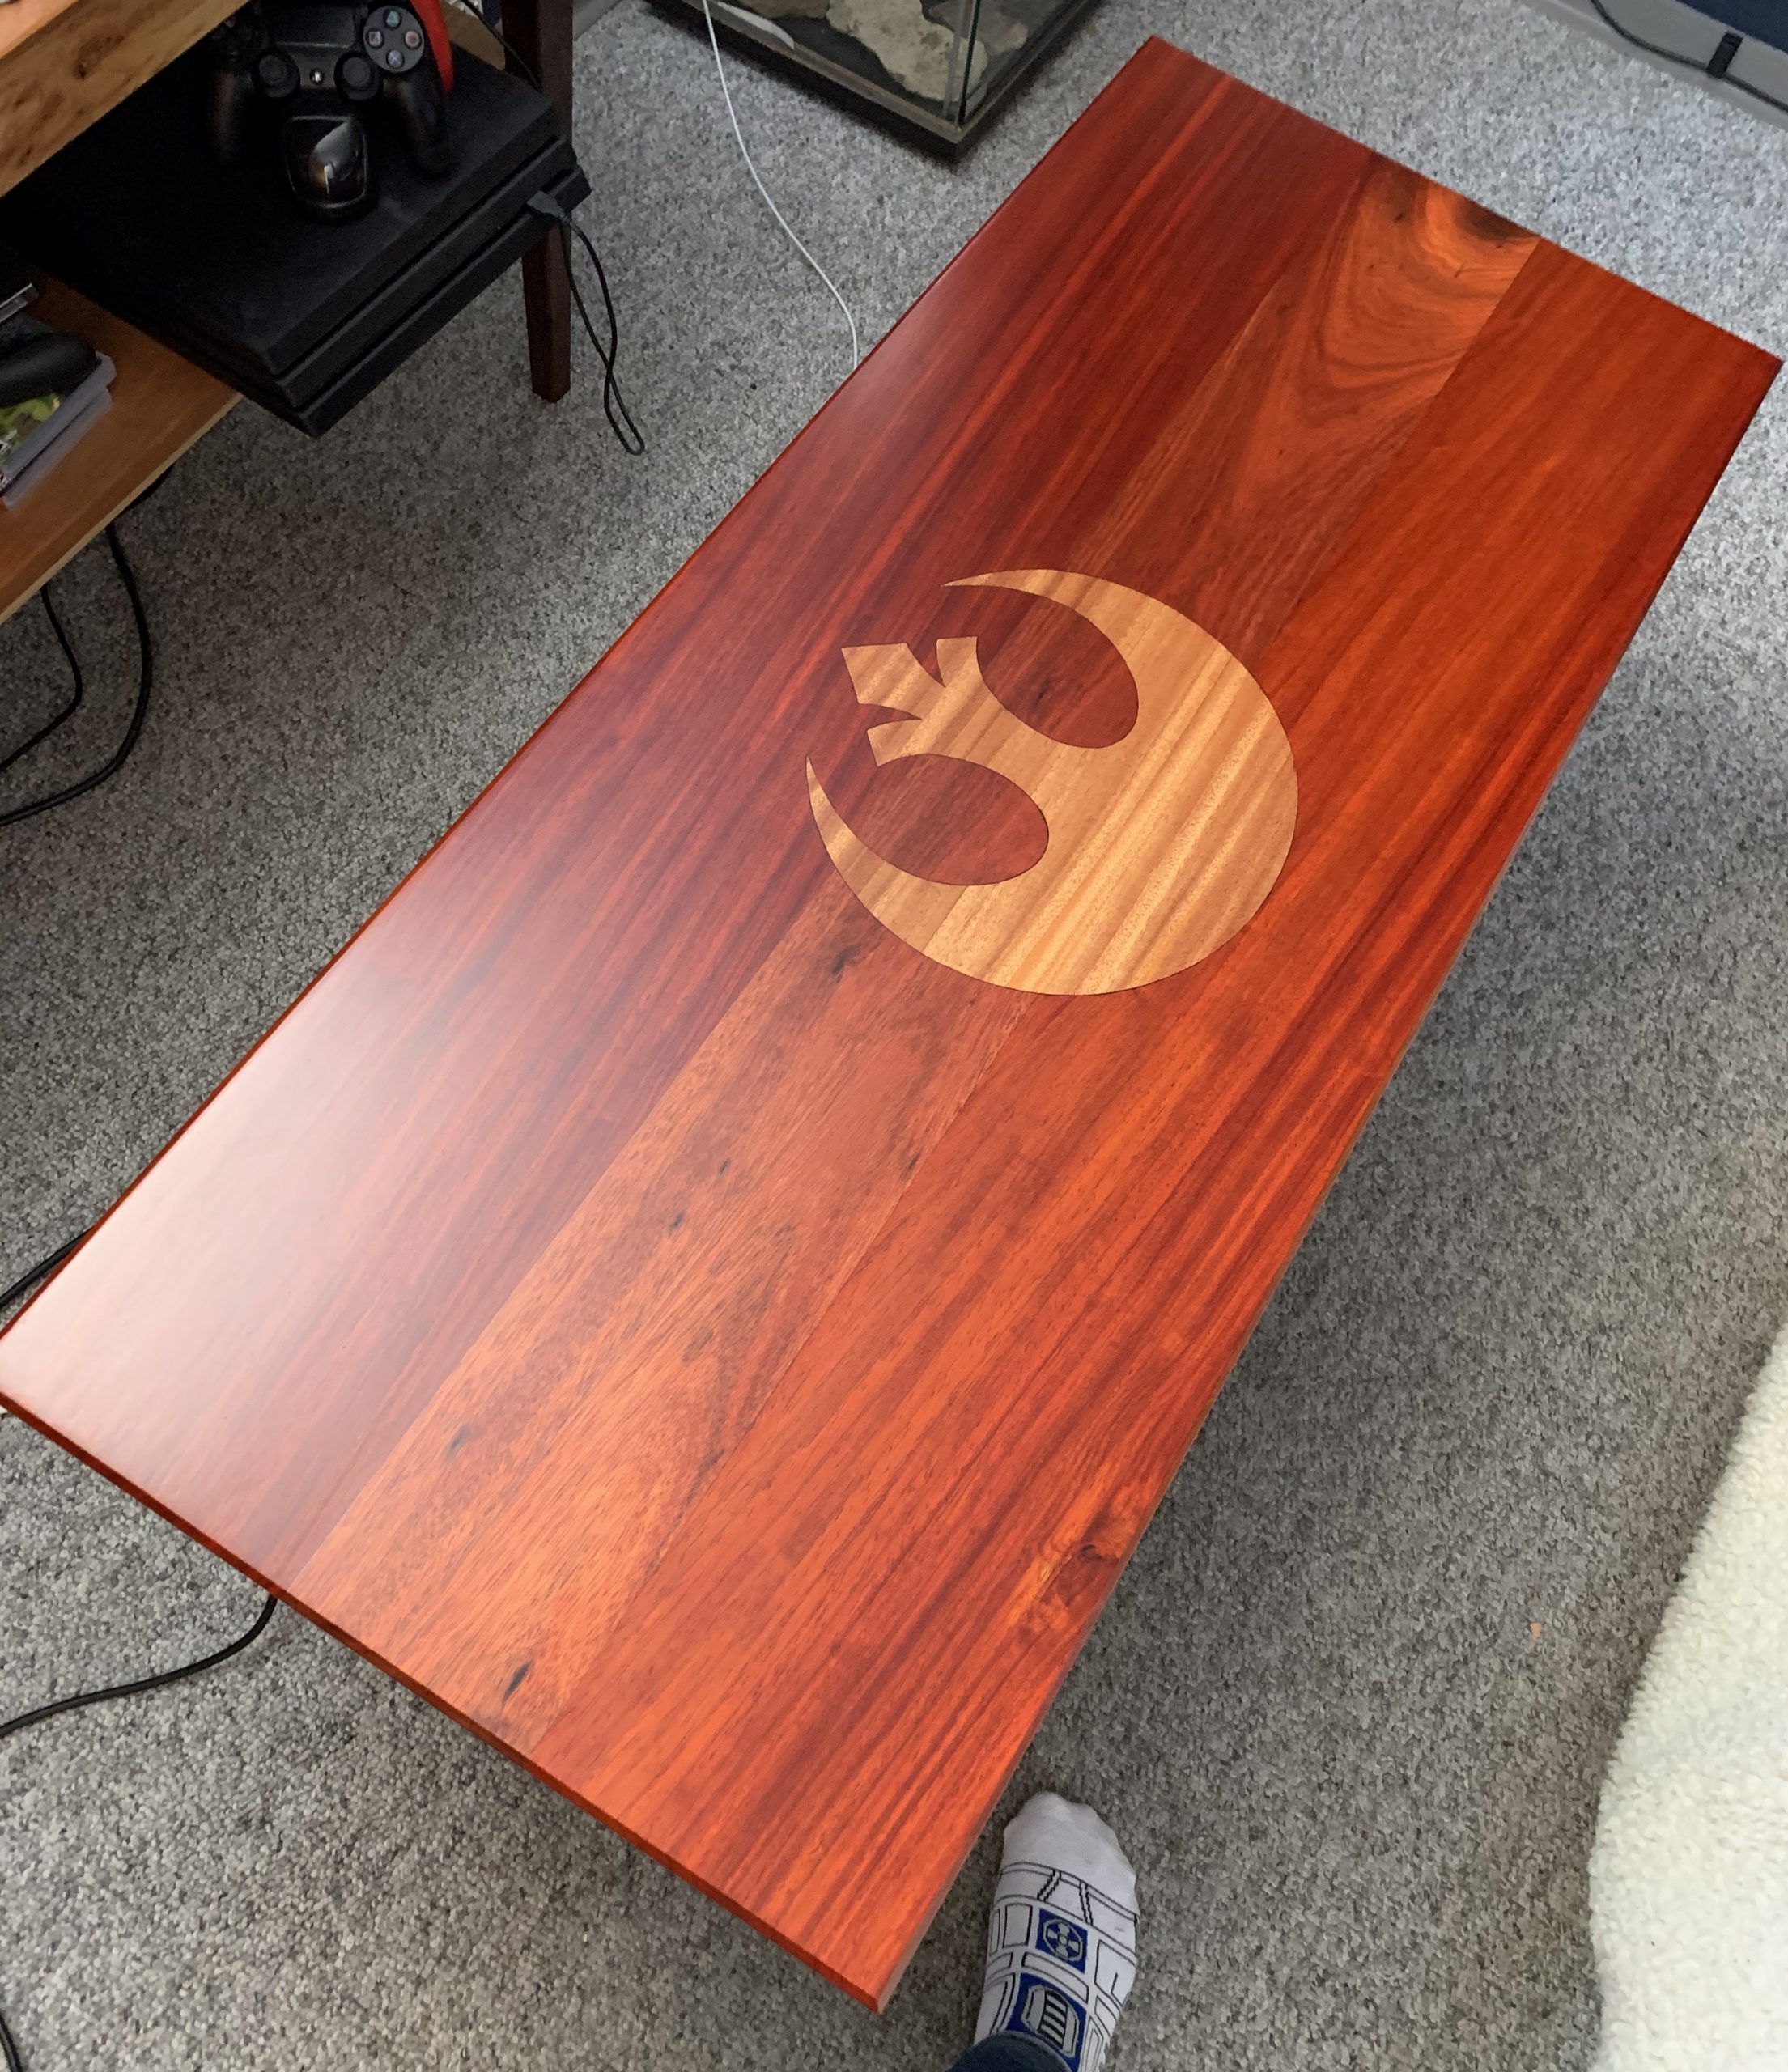 Star Wars Walnut Epoxy Table - On Wooden